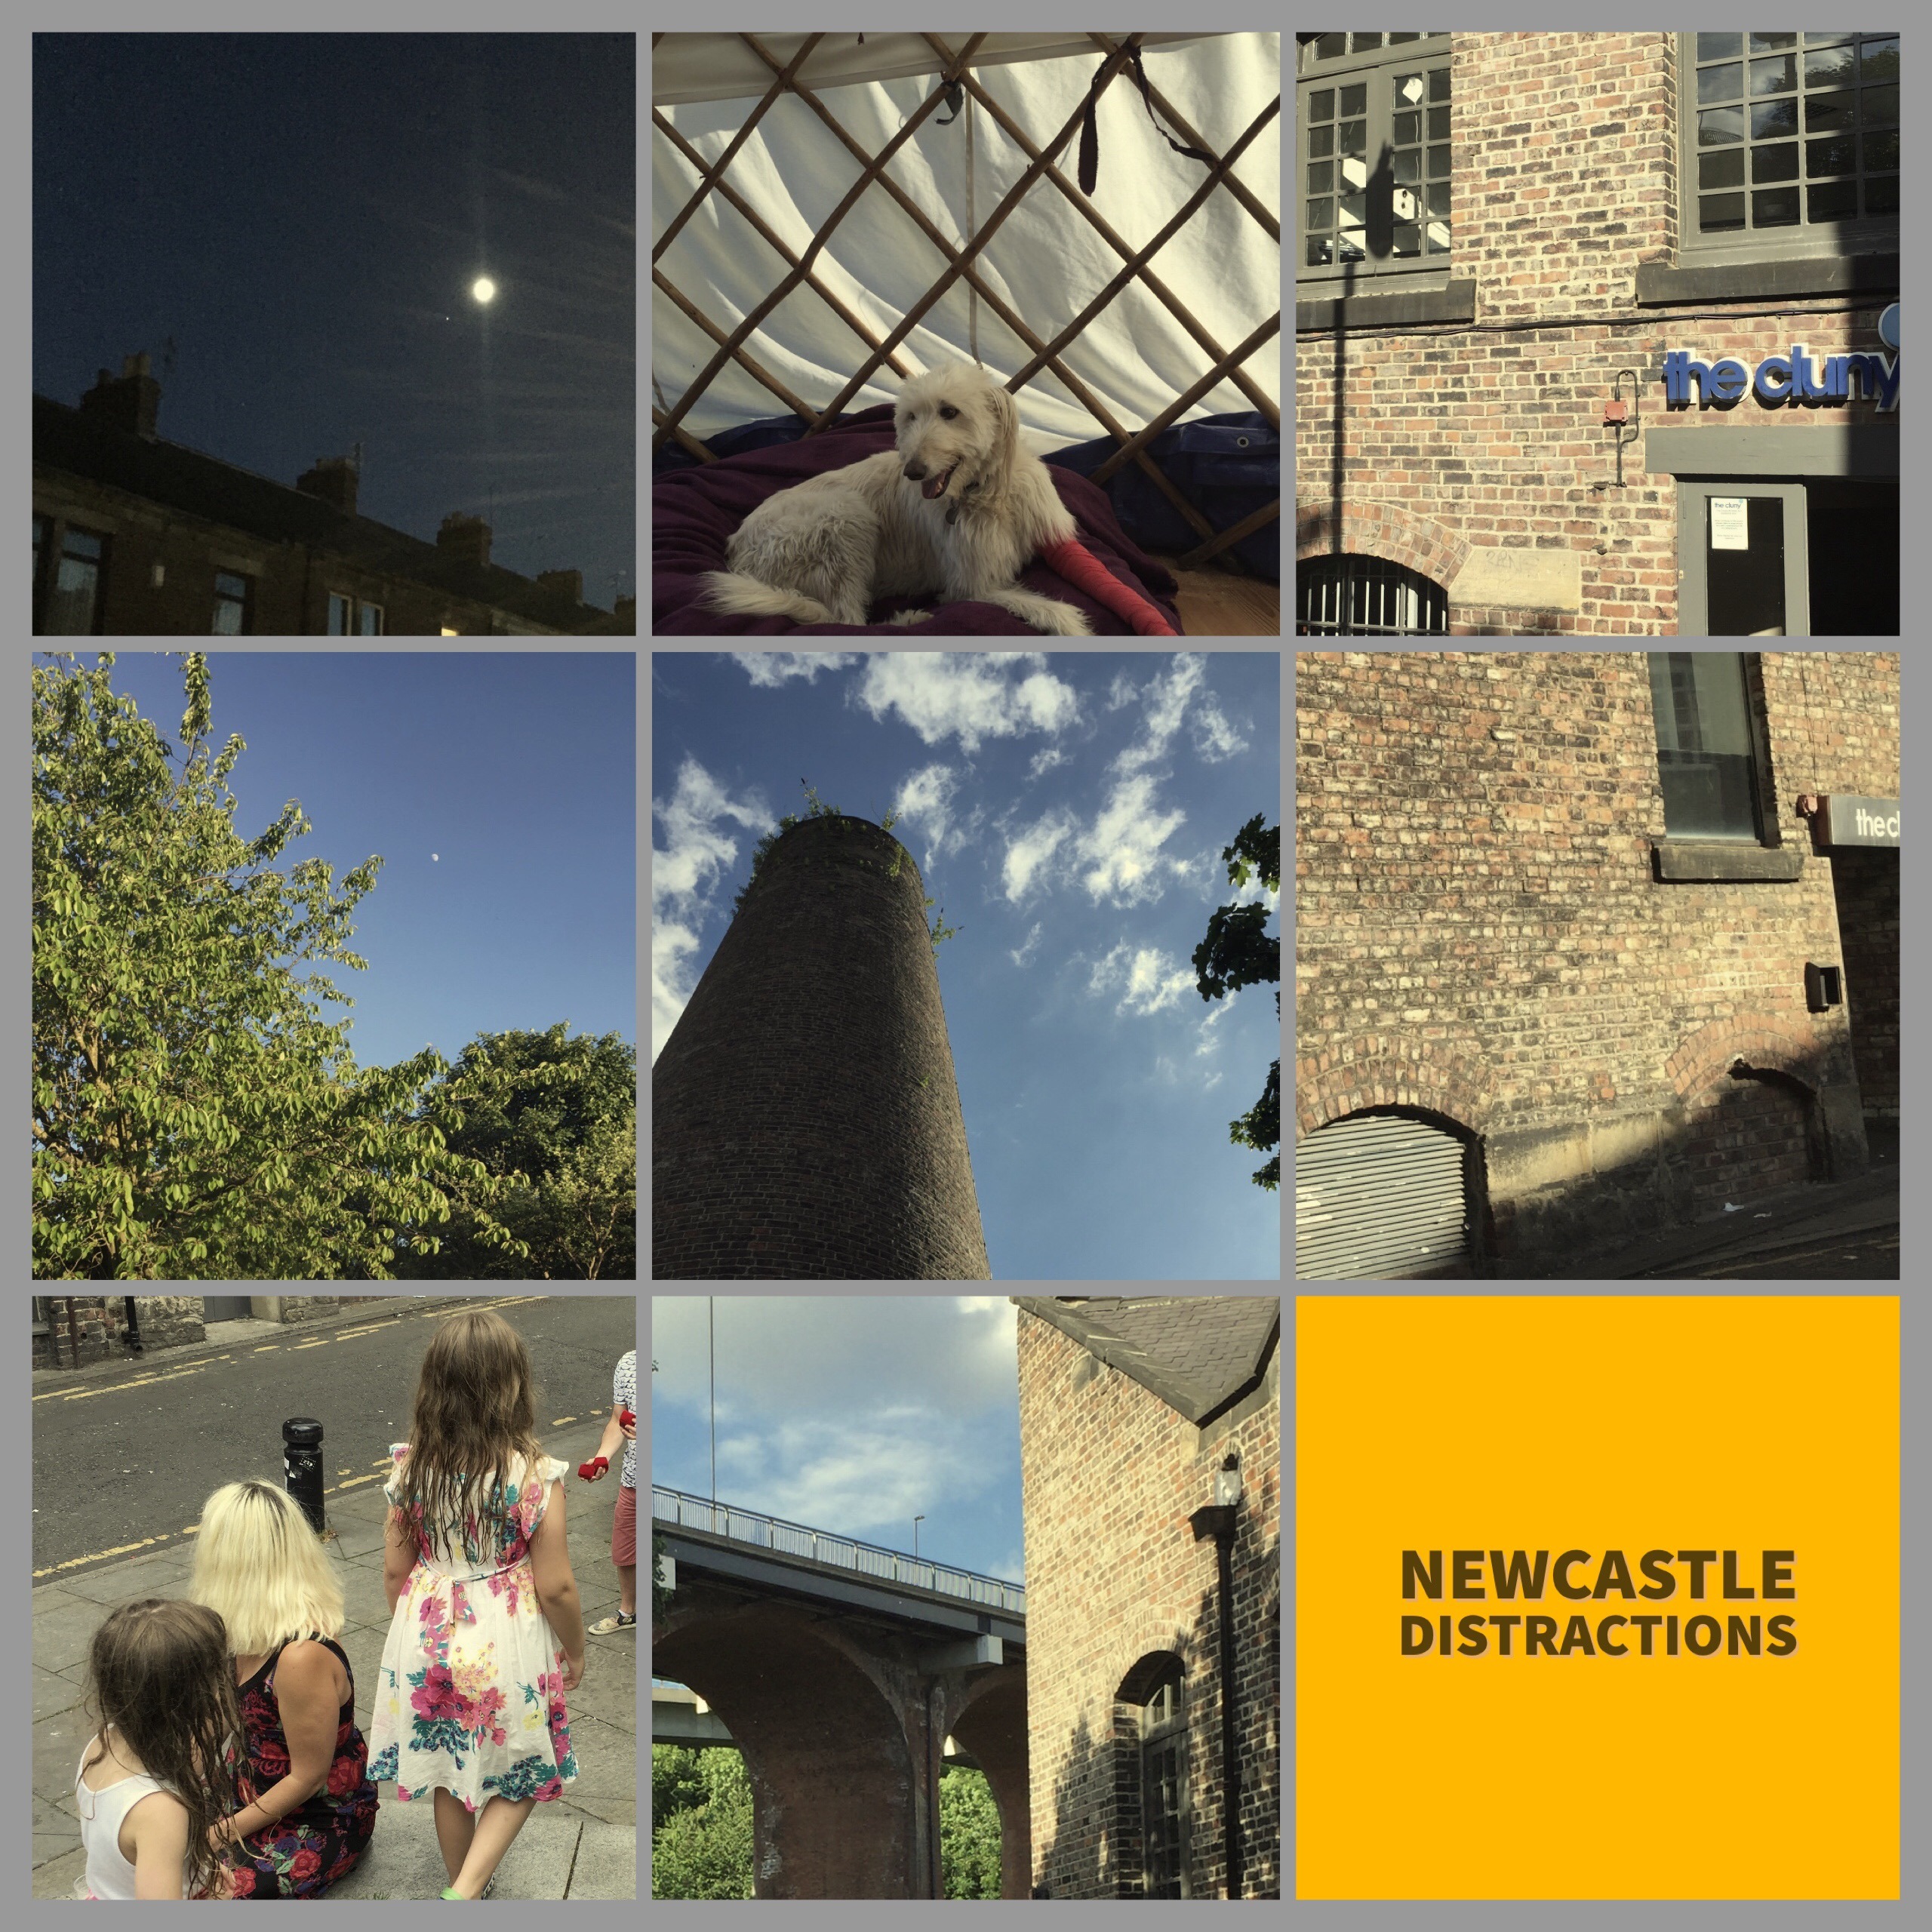 Newcastle, Ouseburn, Gosforth, Walk, shadows, juggling